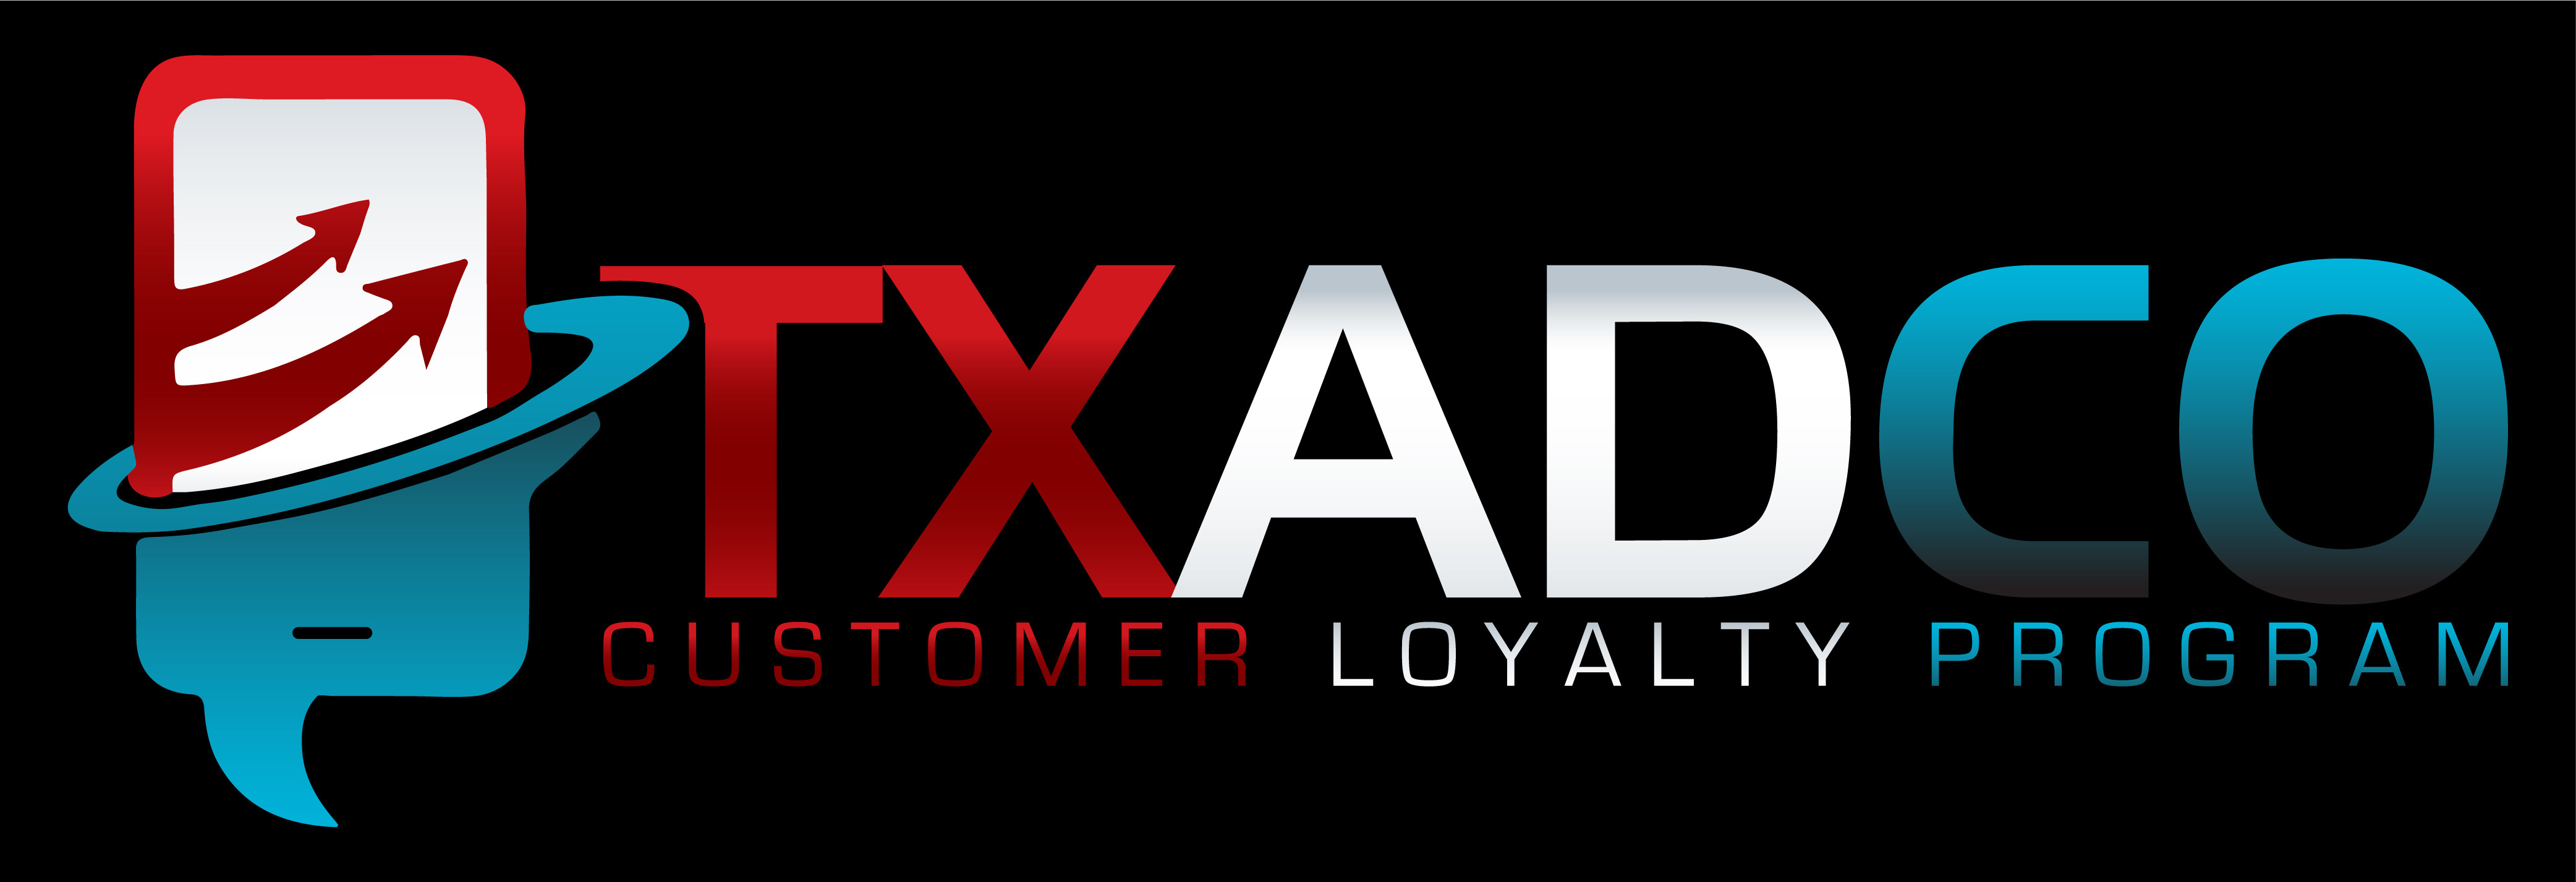 customer-loyalty-program-social-wifi-marketing